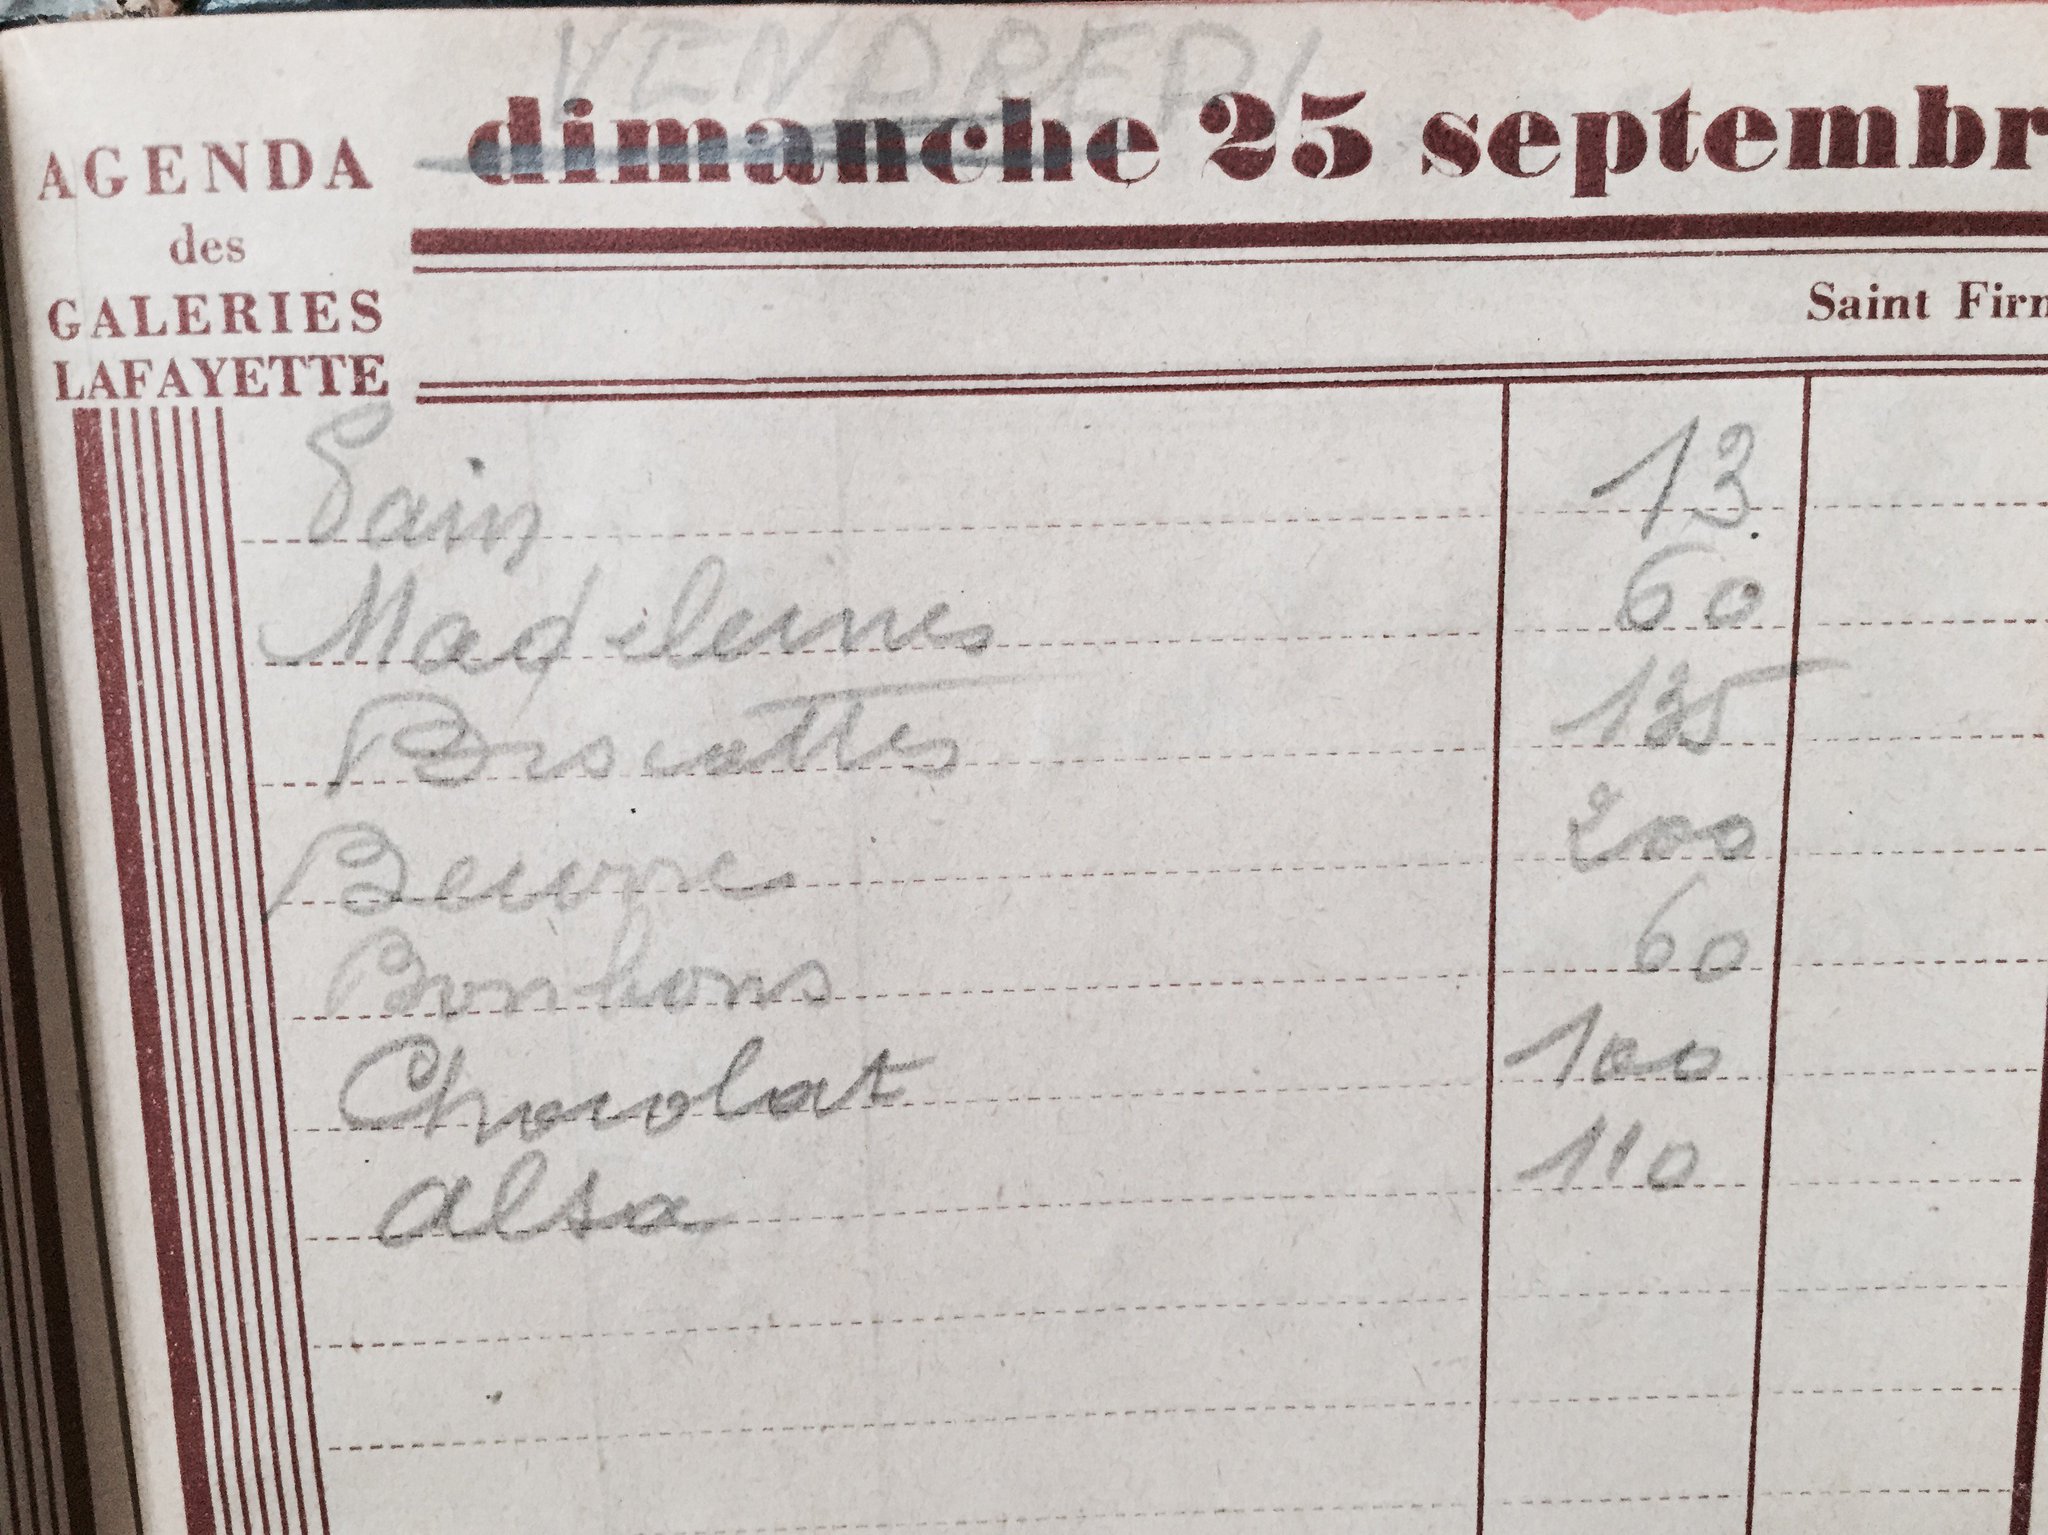 Dans une liste d'achat de l'agenda : des madeleines #Madeleineproject https://t.co/8KoxD4RNTo